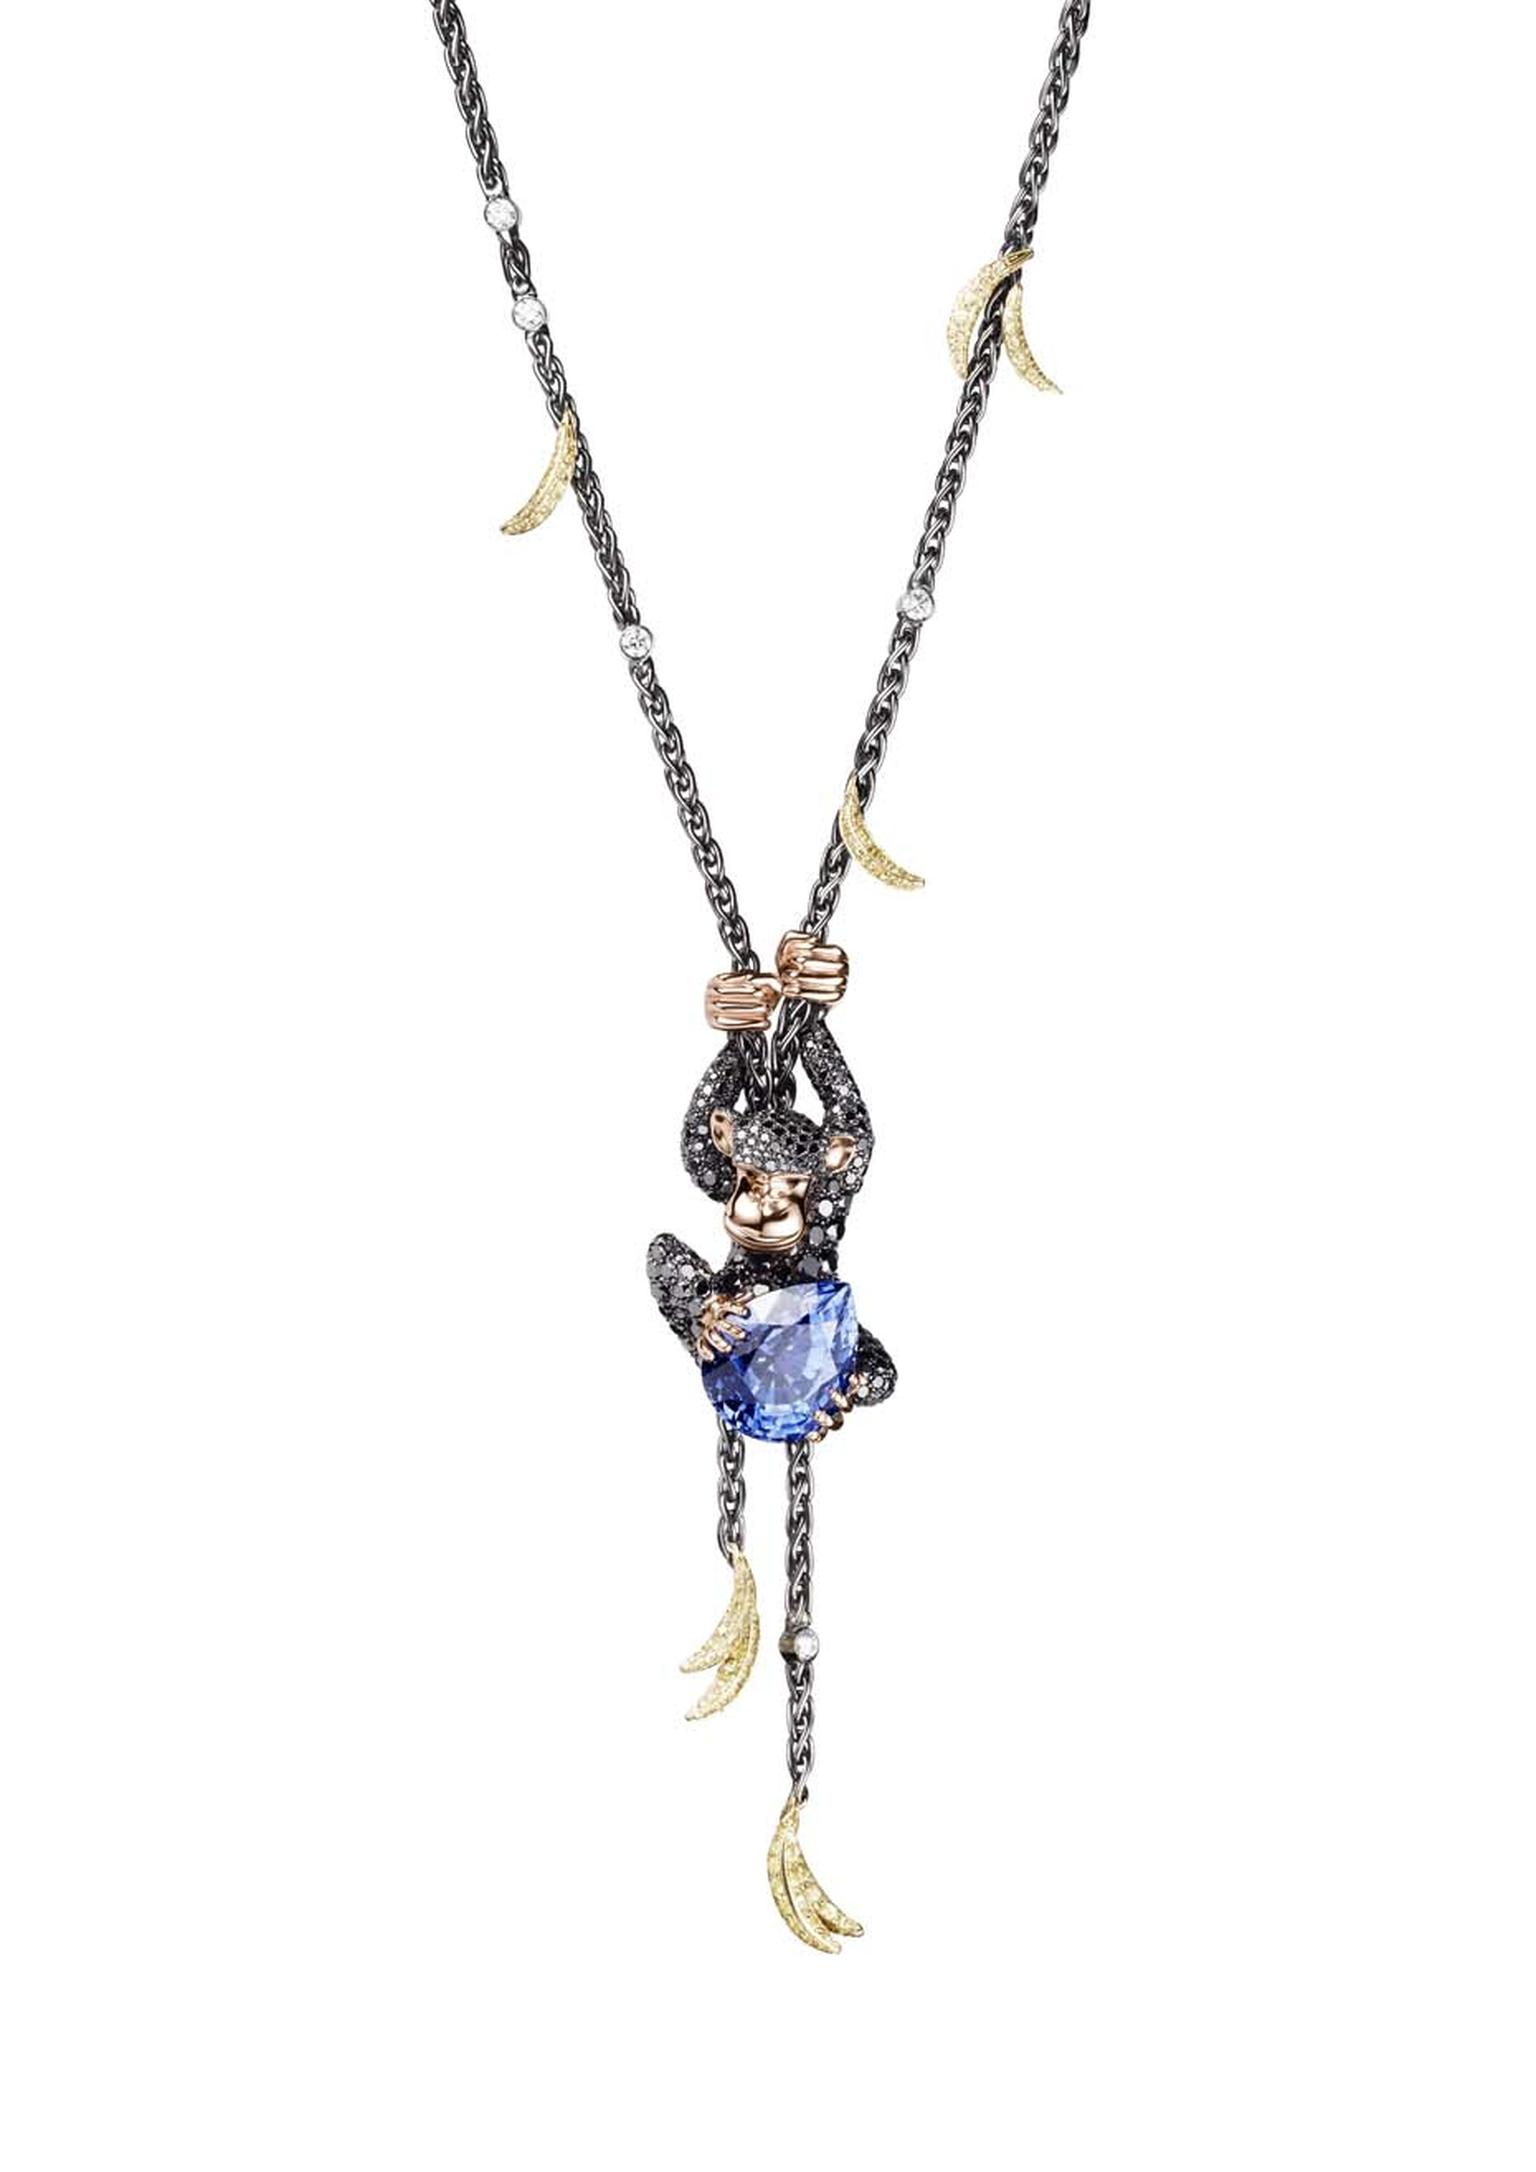 The de GRISOGONO Chimpanzee necklace, set with 771 black diamonds, 247 yellow sapphires, white diamonds and a pear-cut blue sapphire, worn by Cara Delevingne to de GRISOGONO's Eden Roc party.